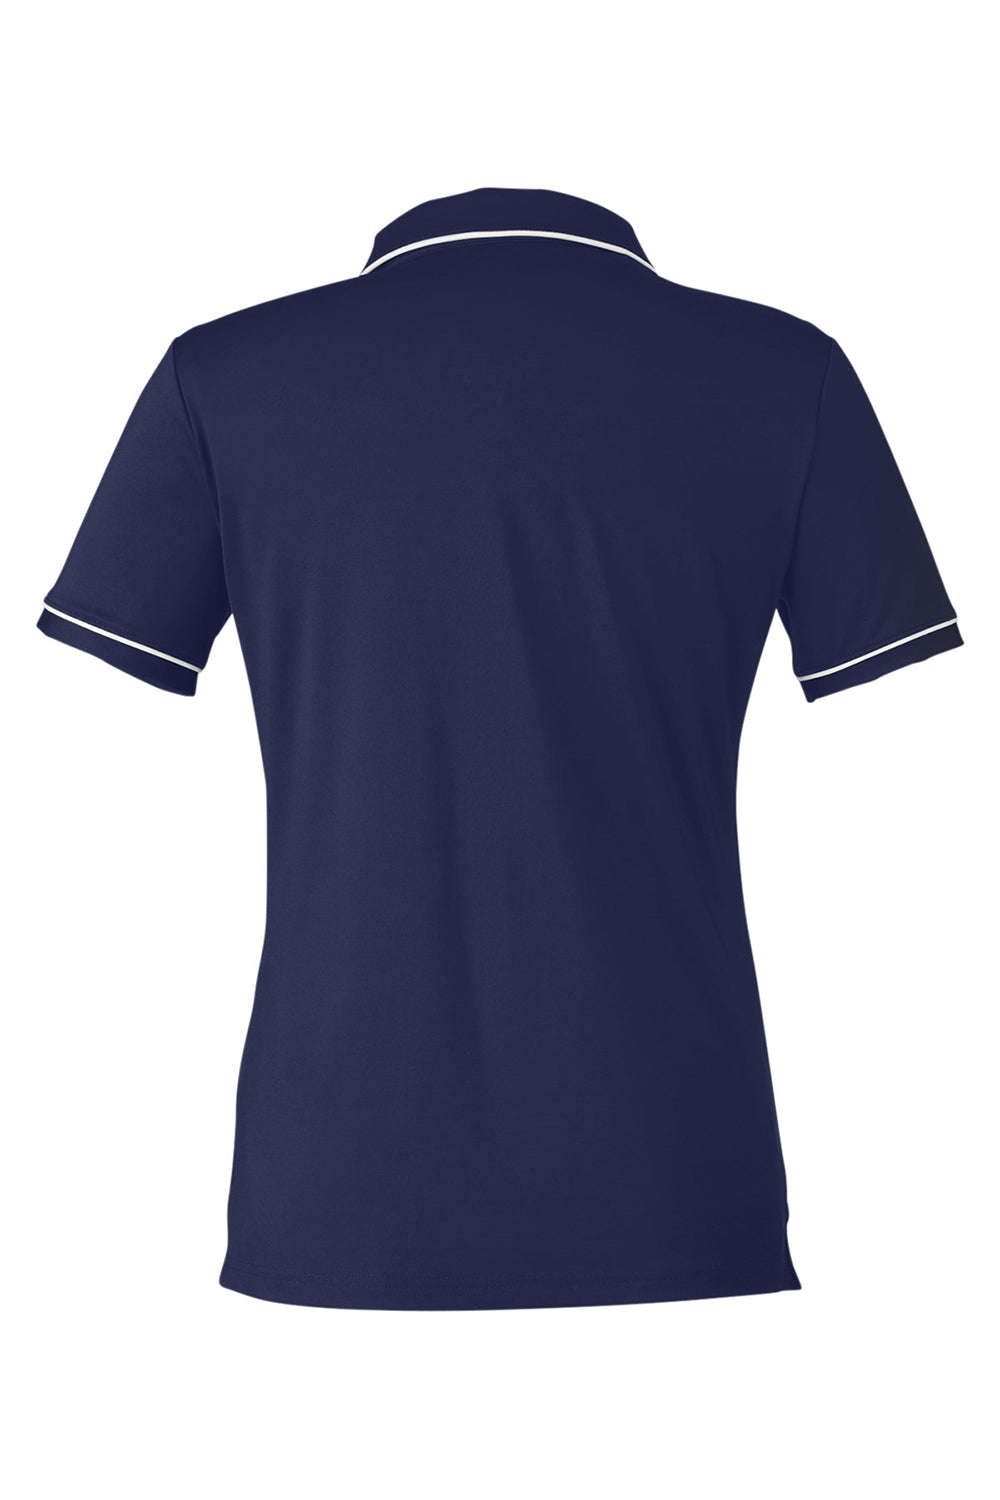 Under Armour 1376905 Womens Teams Performance Moisture Wicking Short Sleeve Polo Shirt Midnight Navy Blue Flat Back